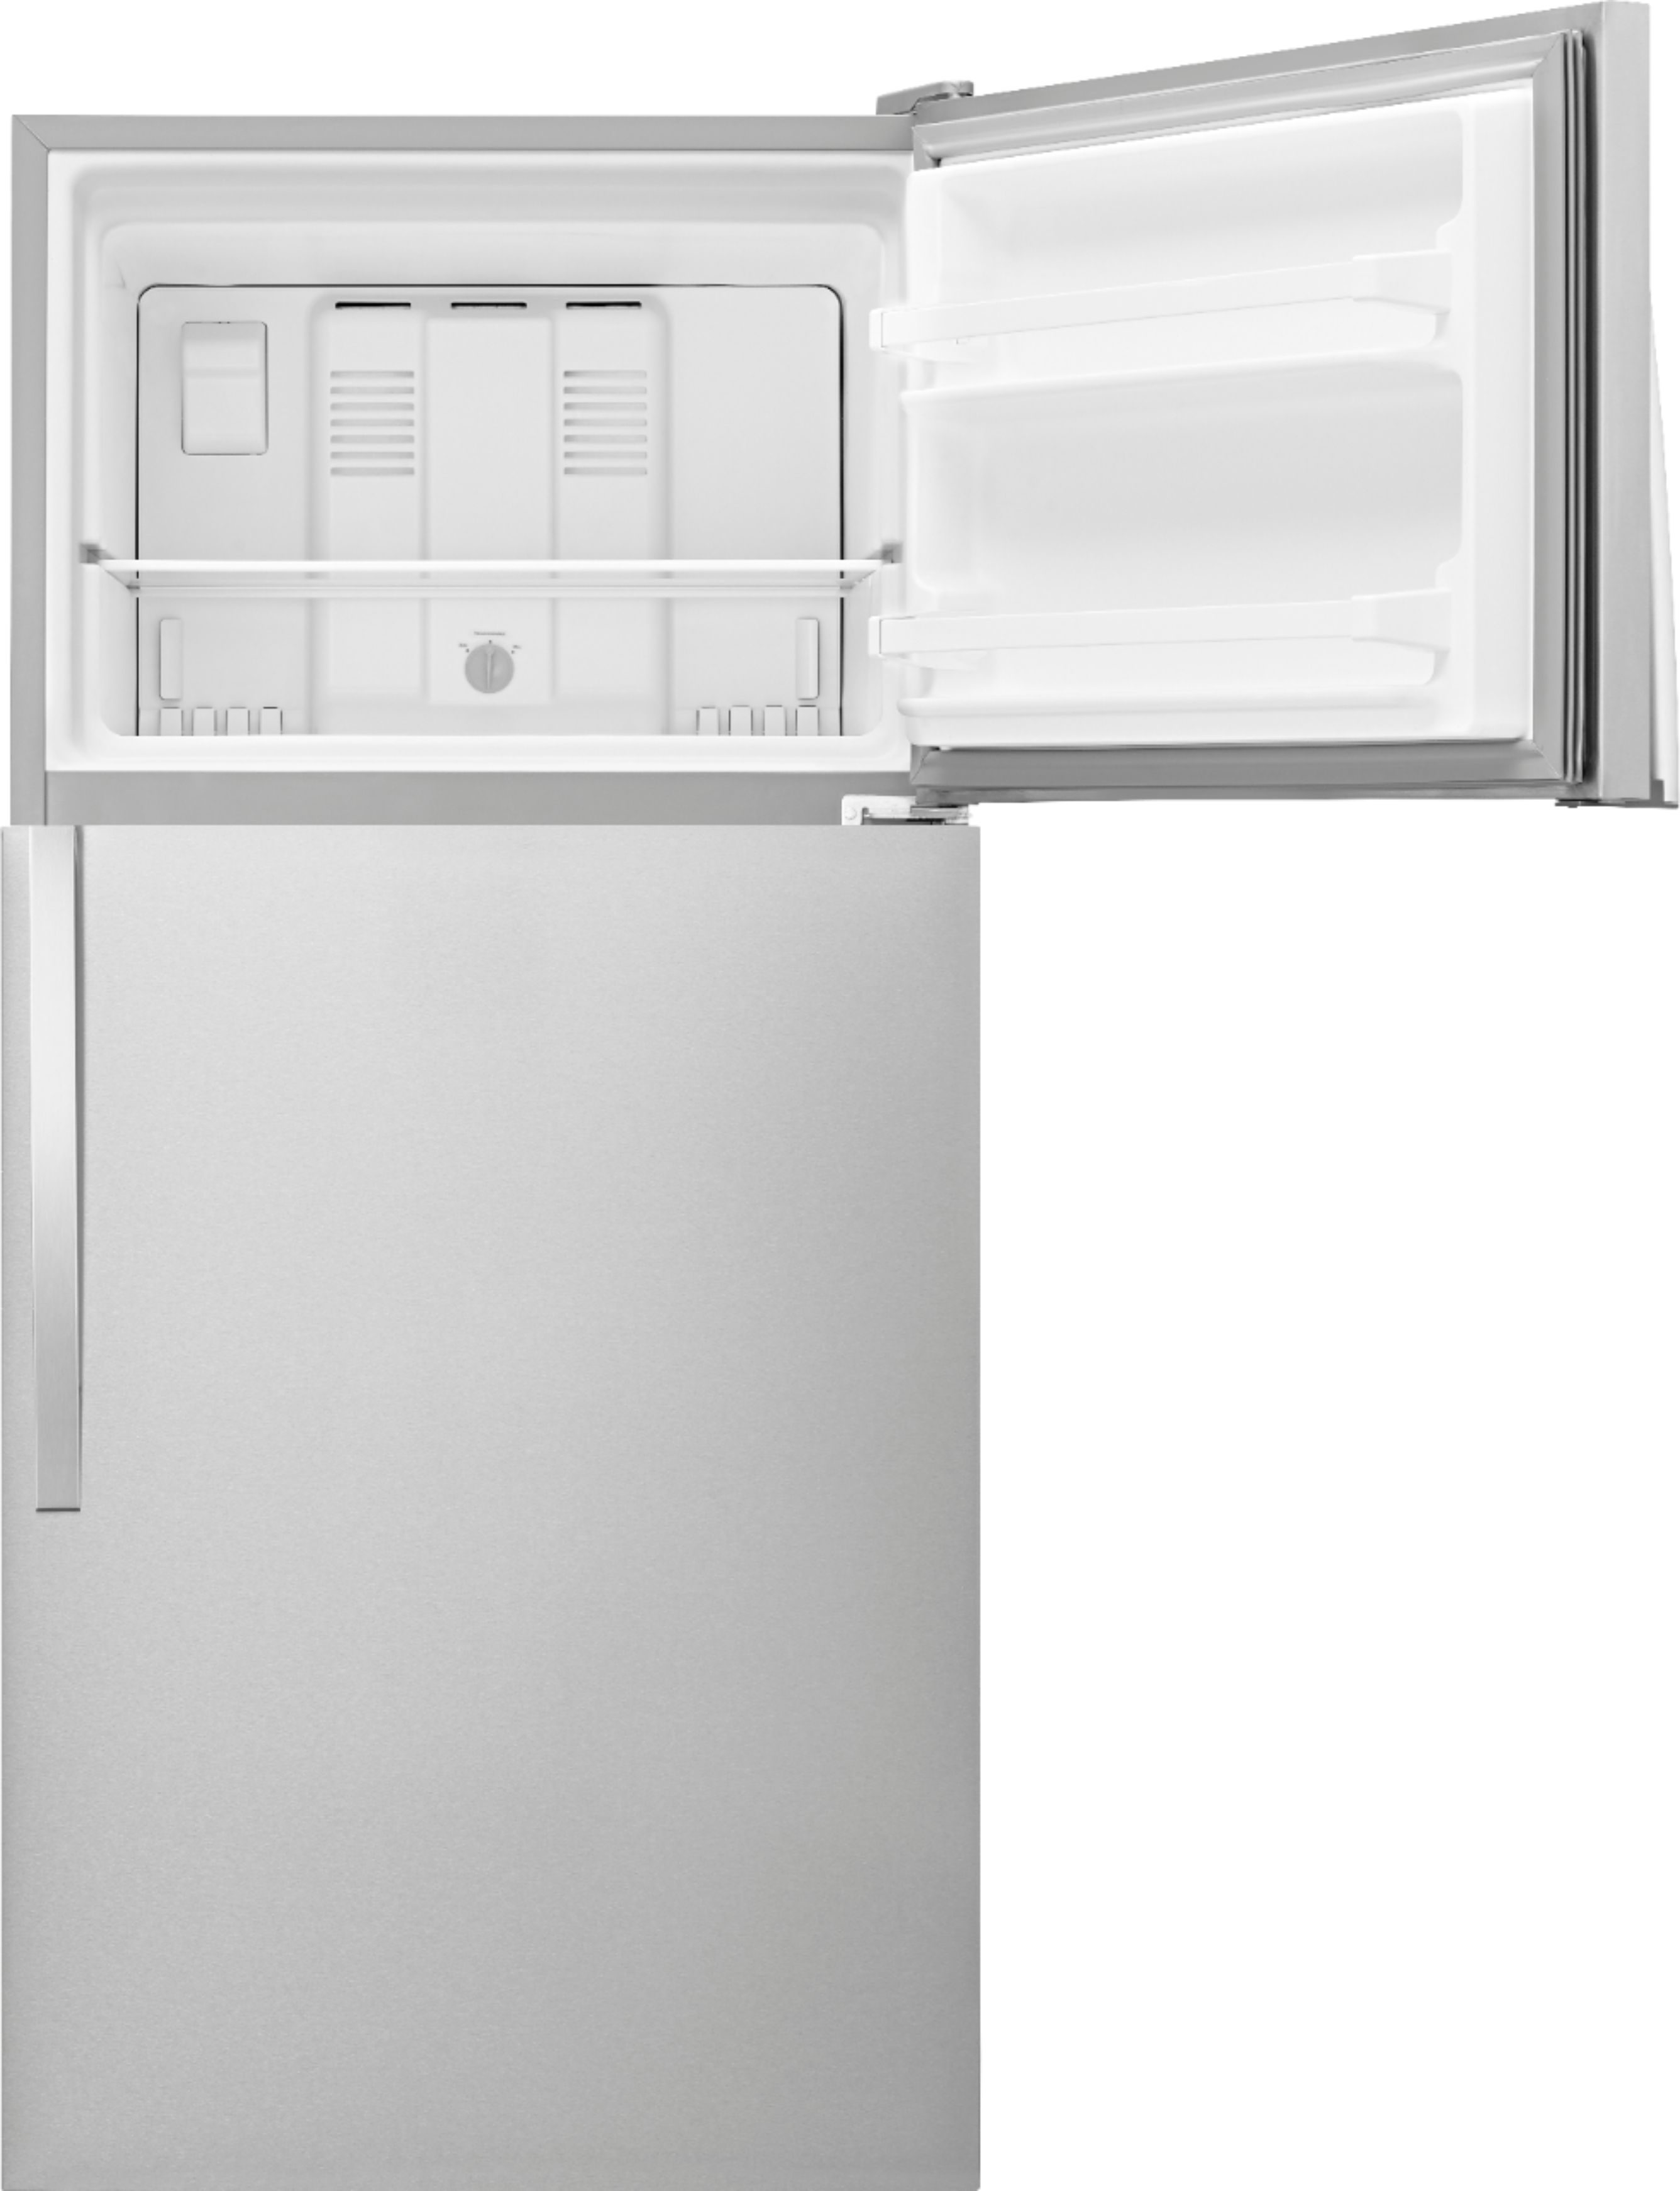 Whirlpool 18.3 Cu. Ft. Top-Freezer Refrigerator Stainless steel Whirlpool Stainless Steel Refrigerator Top Freezer